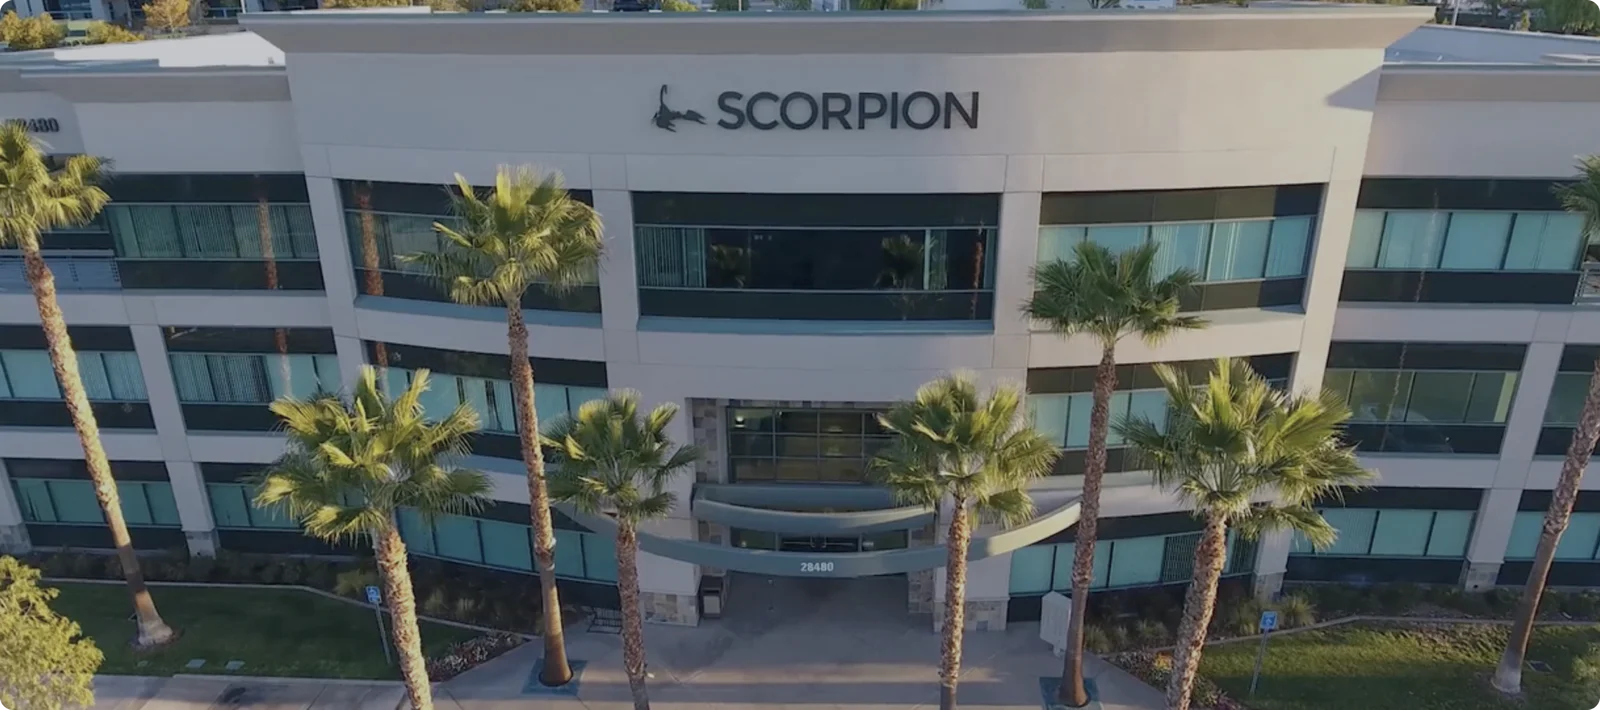 Scorpion video placeholder